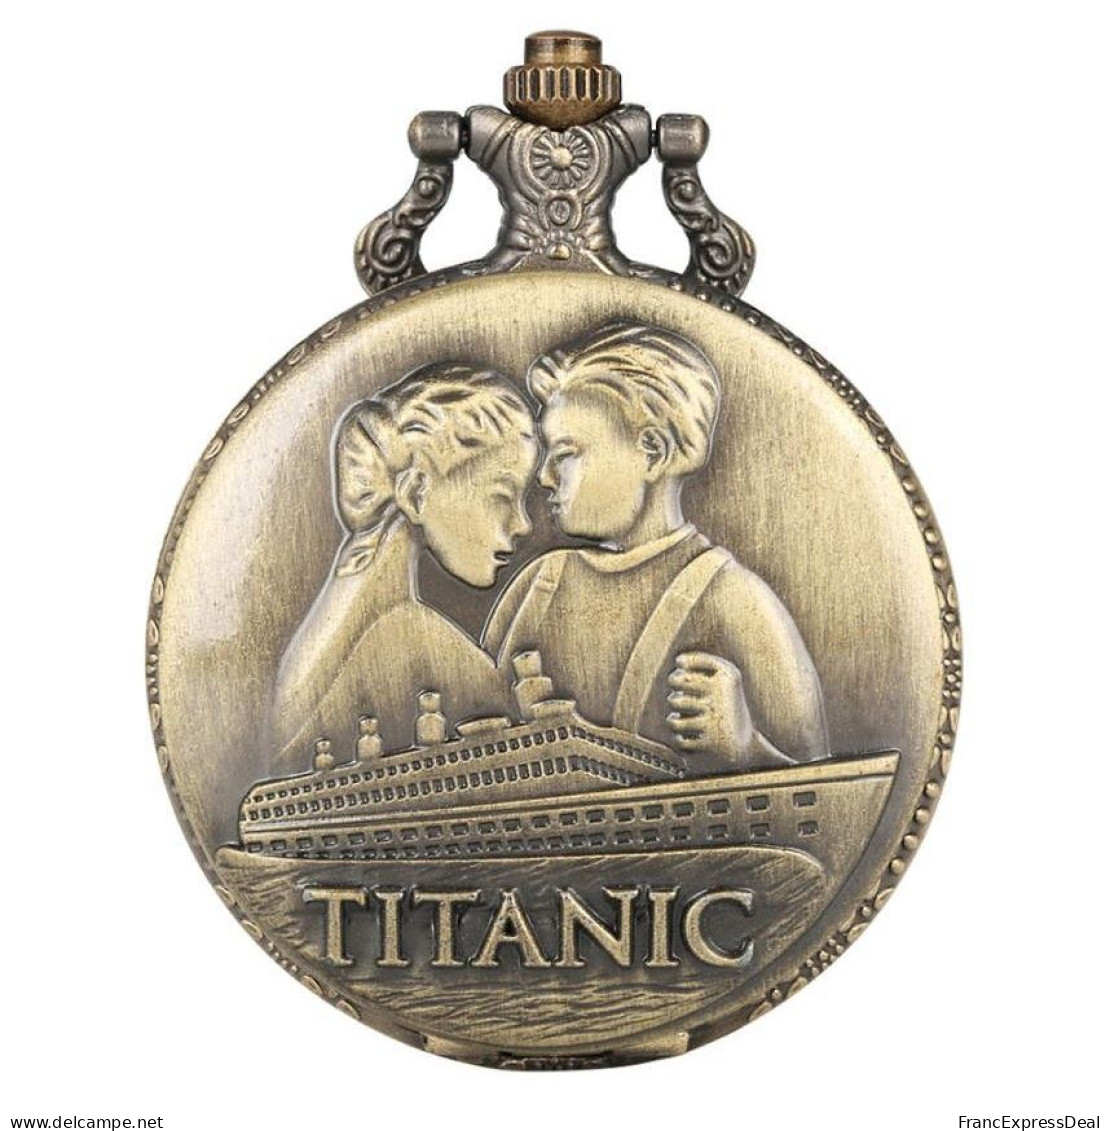 Montre Gousset NEUVE - RMS Titanic Jack Dawson Et Rose Dewitt Bukater - Horloge: Zakhorloge